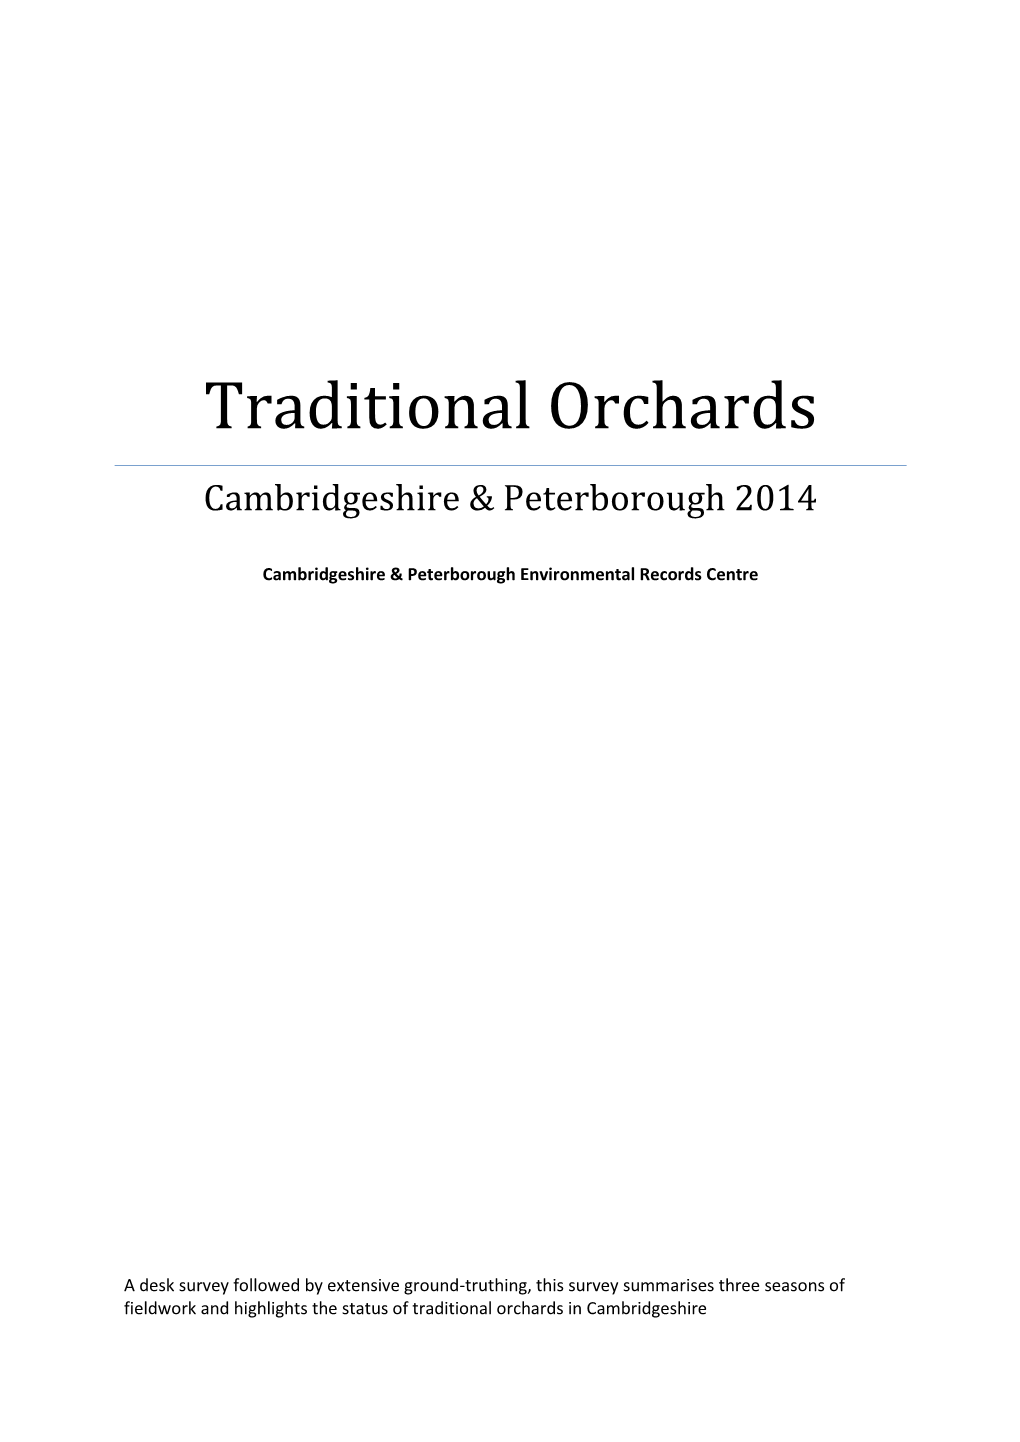 Traditional Orchards Cambridgeshire & Peterborough 2014